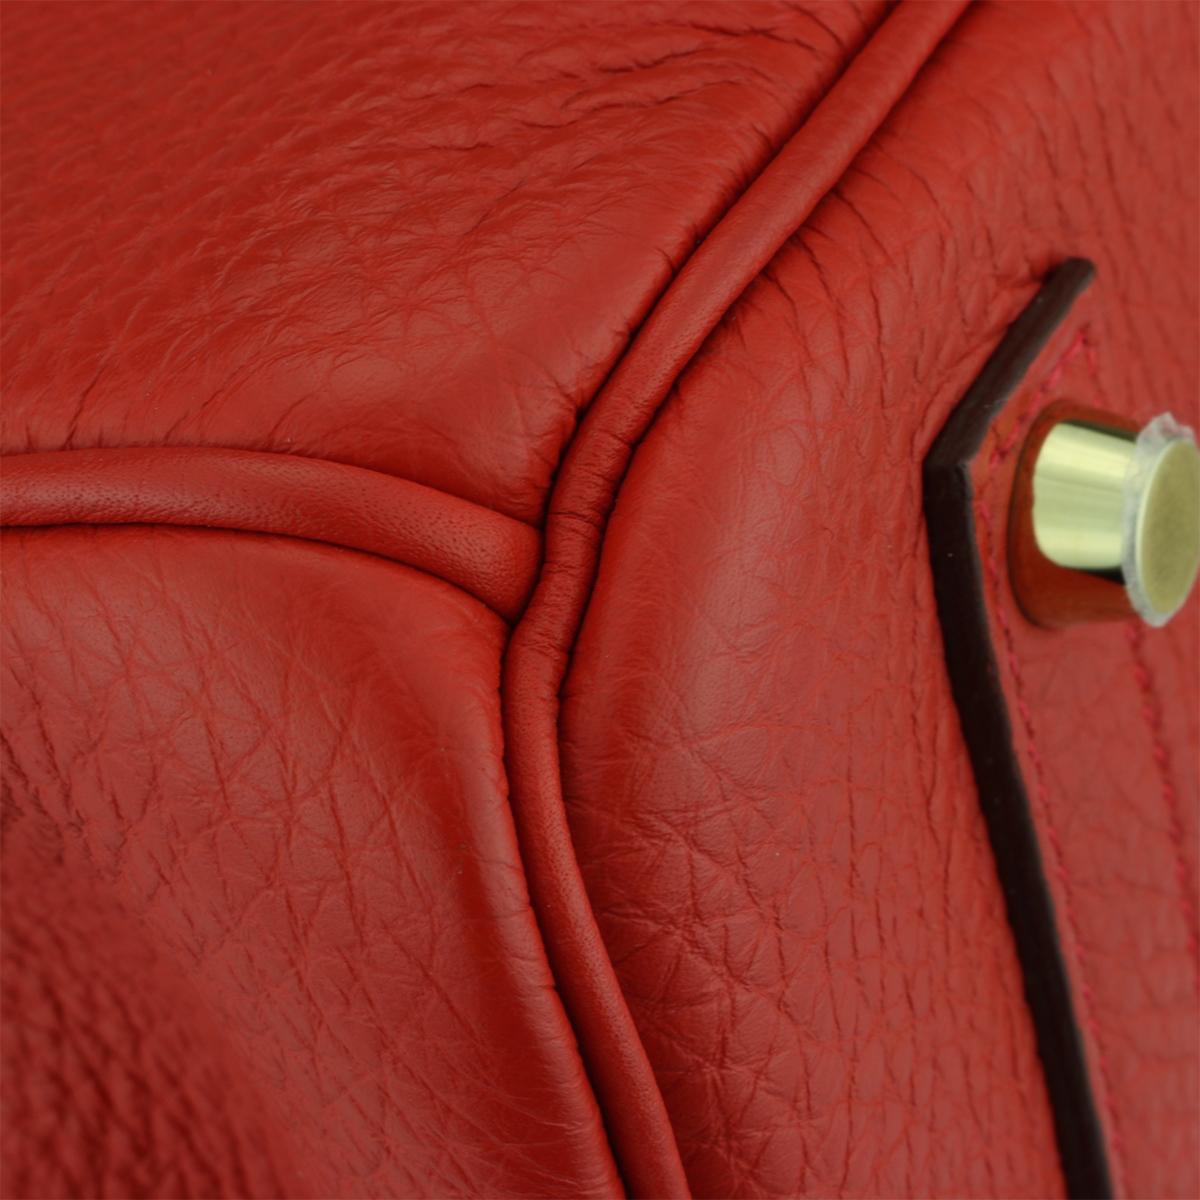 Hermès Birkin 35cm Bag Geranium Togo Leather with Gold Hardware Stamp P 2012 1